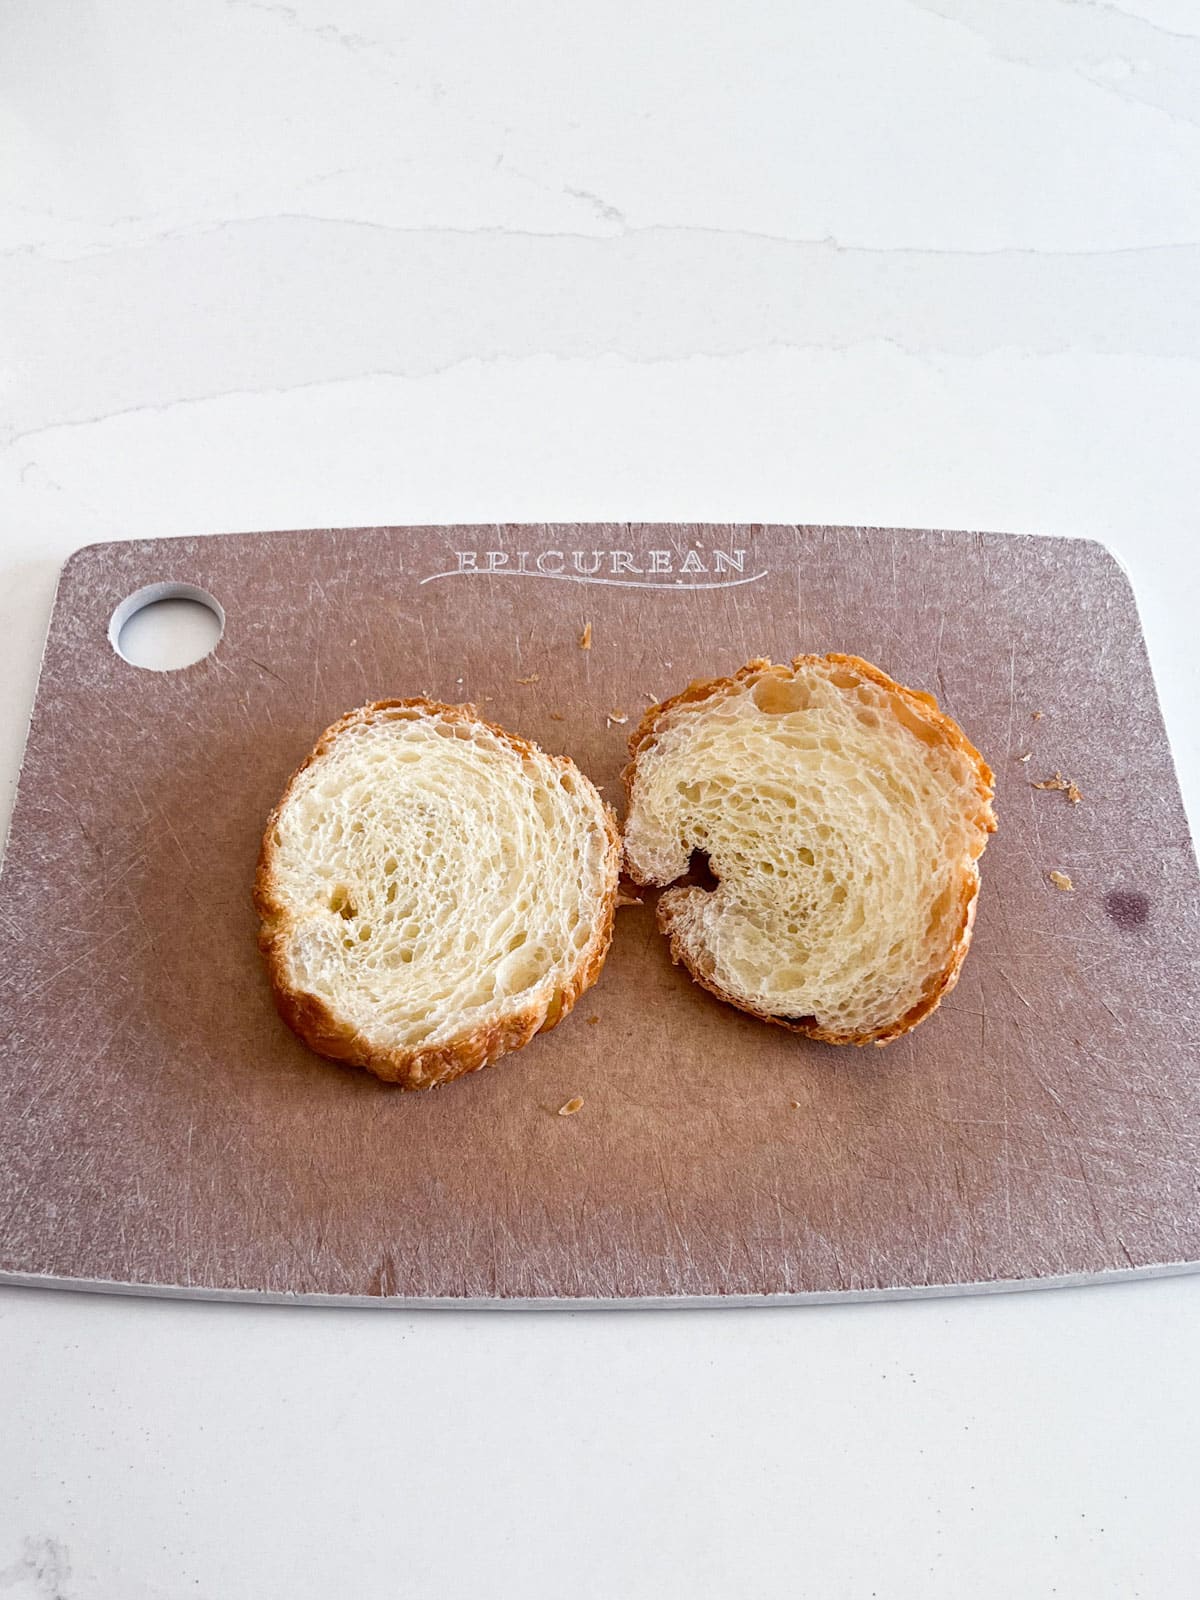 A croissant cut in half on a cutting board.